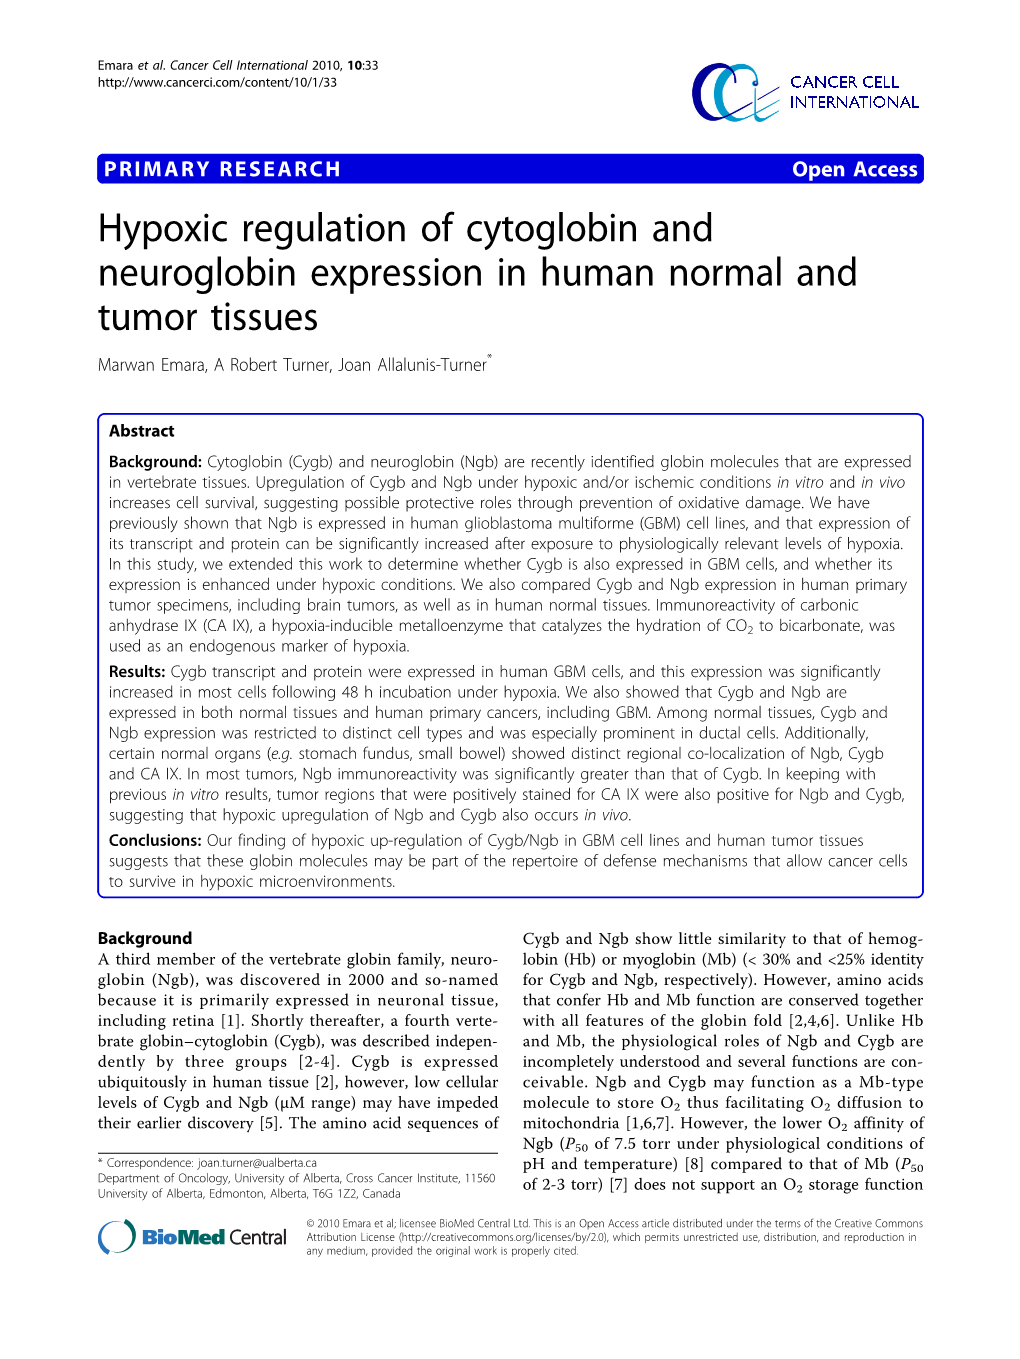 Hypoxic Regulation of Cytoglobin and Neuroglobin Expression in Human Normal and Tumor Tissues Marwan Emara, a Robert Turner, Joan Allalunis-Turner*